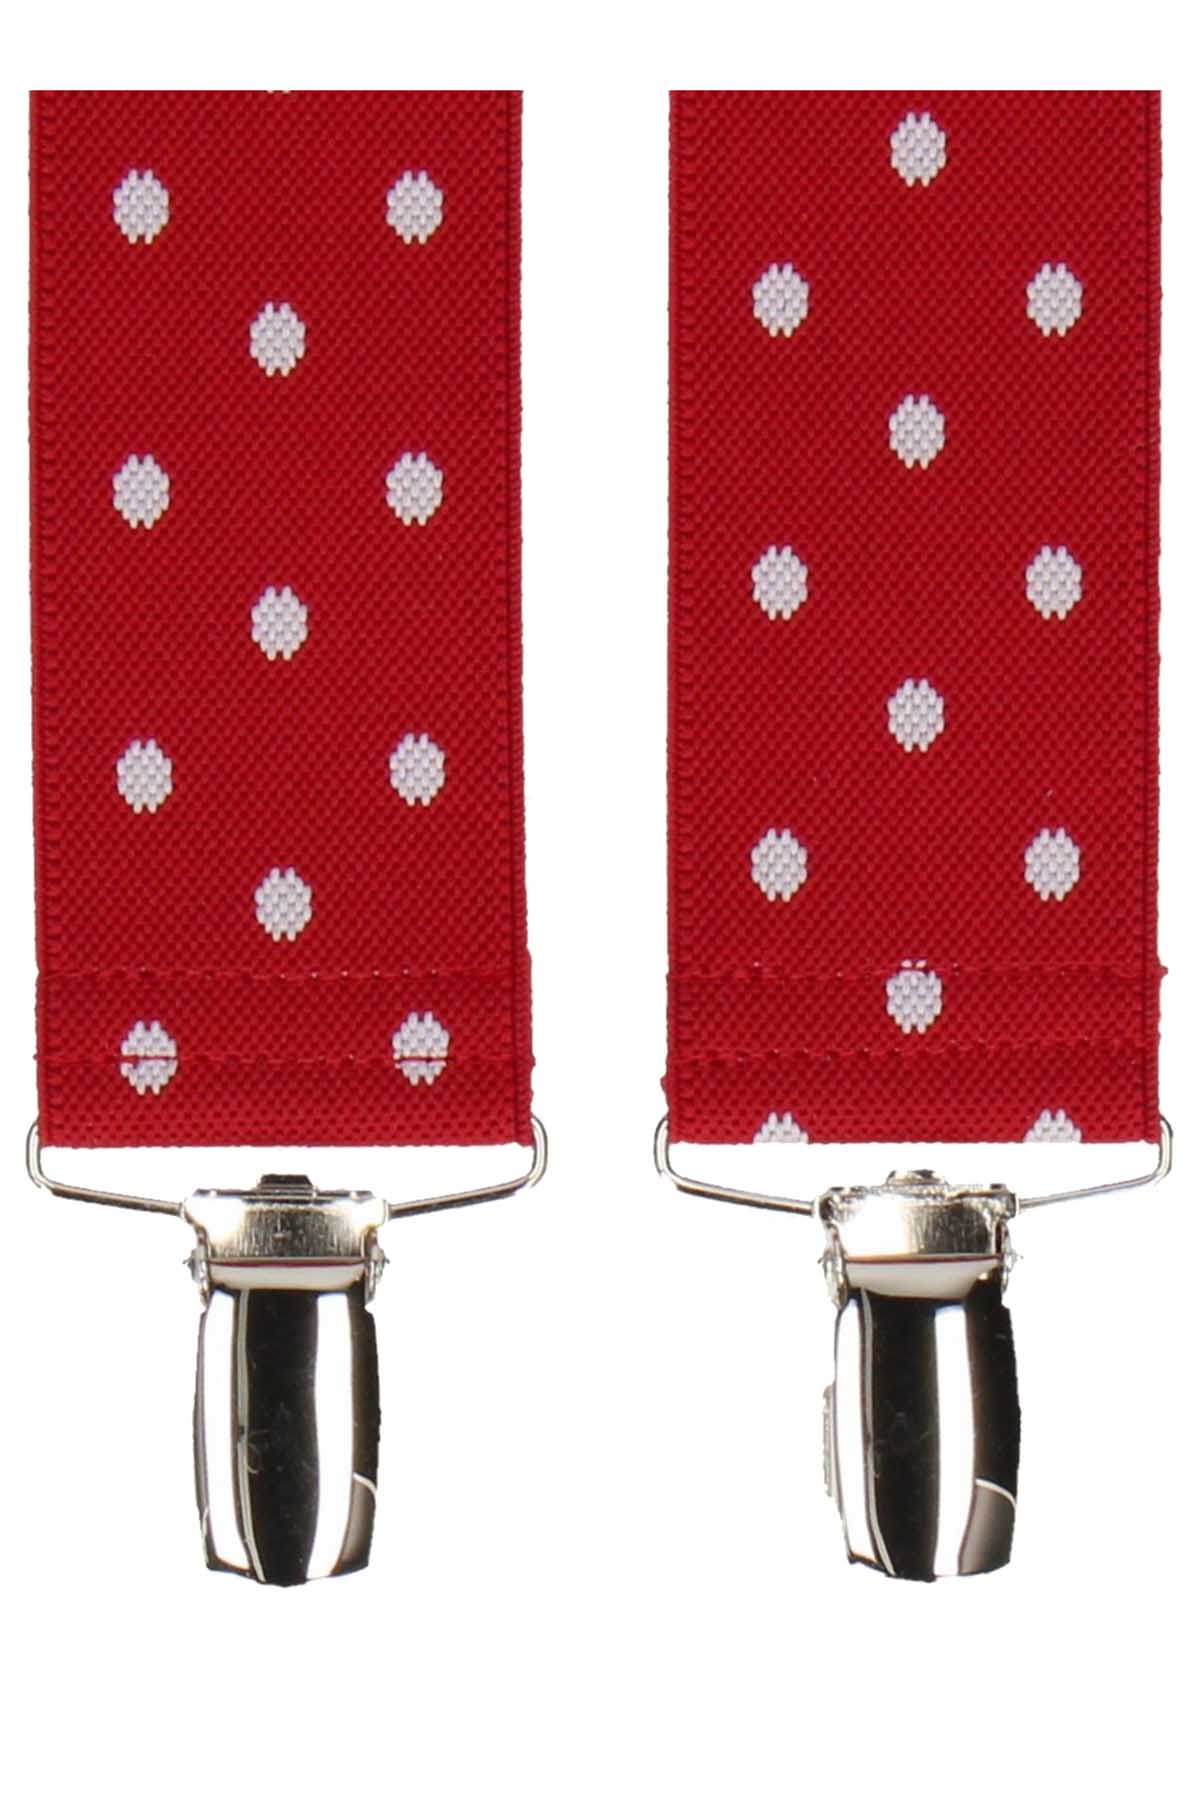 Mrs. Bow Tie Red & White Polka Dot Broxton Suspenders